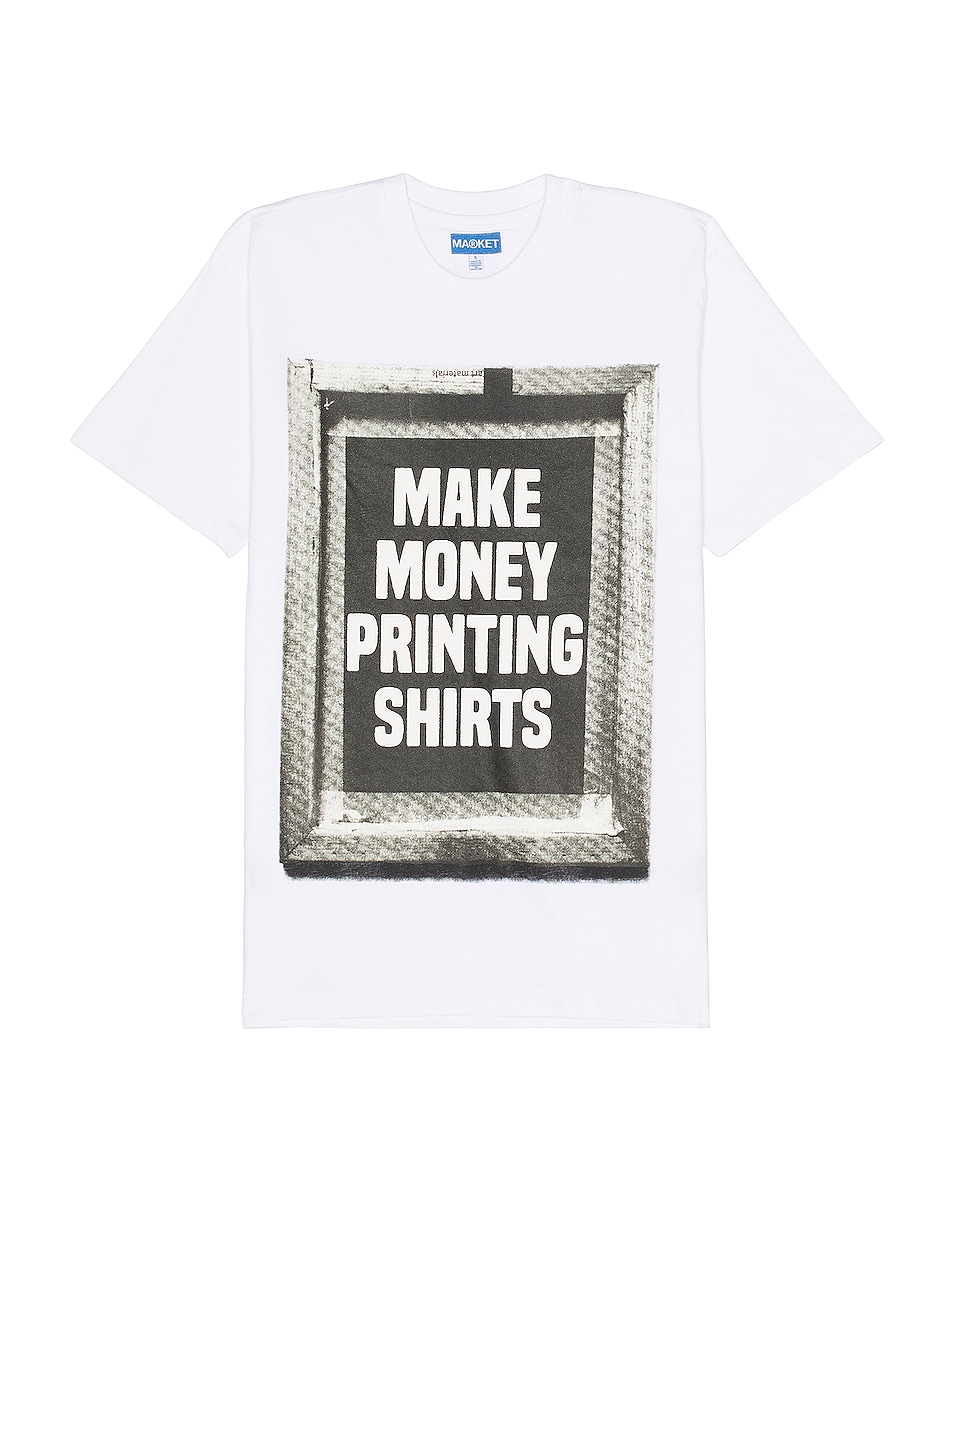 Printing Money T-shirt in White